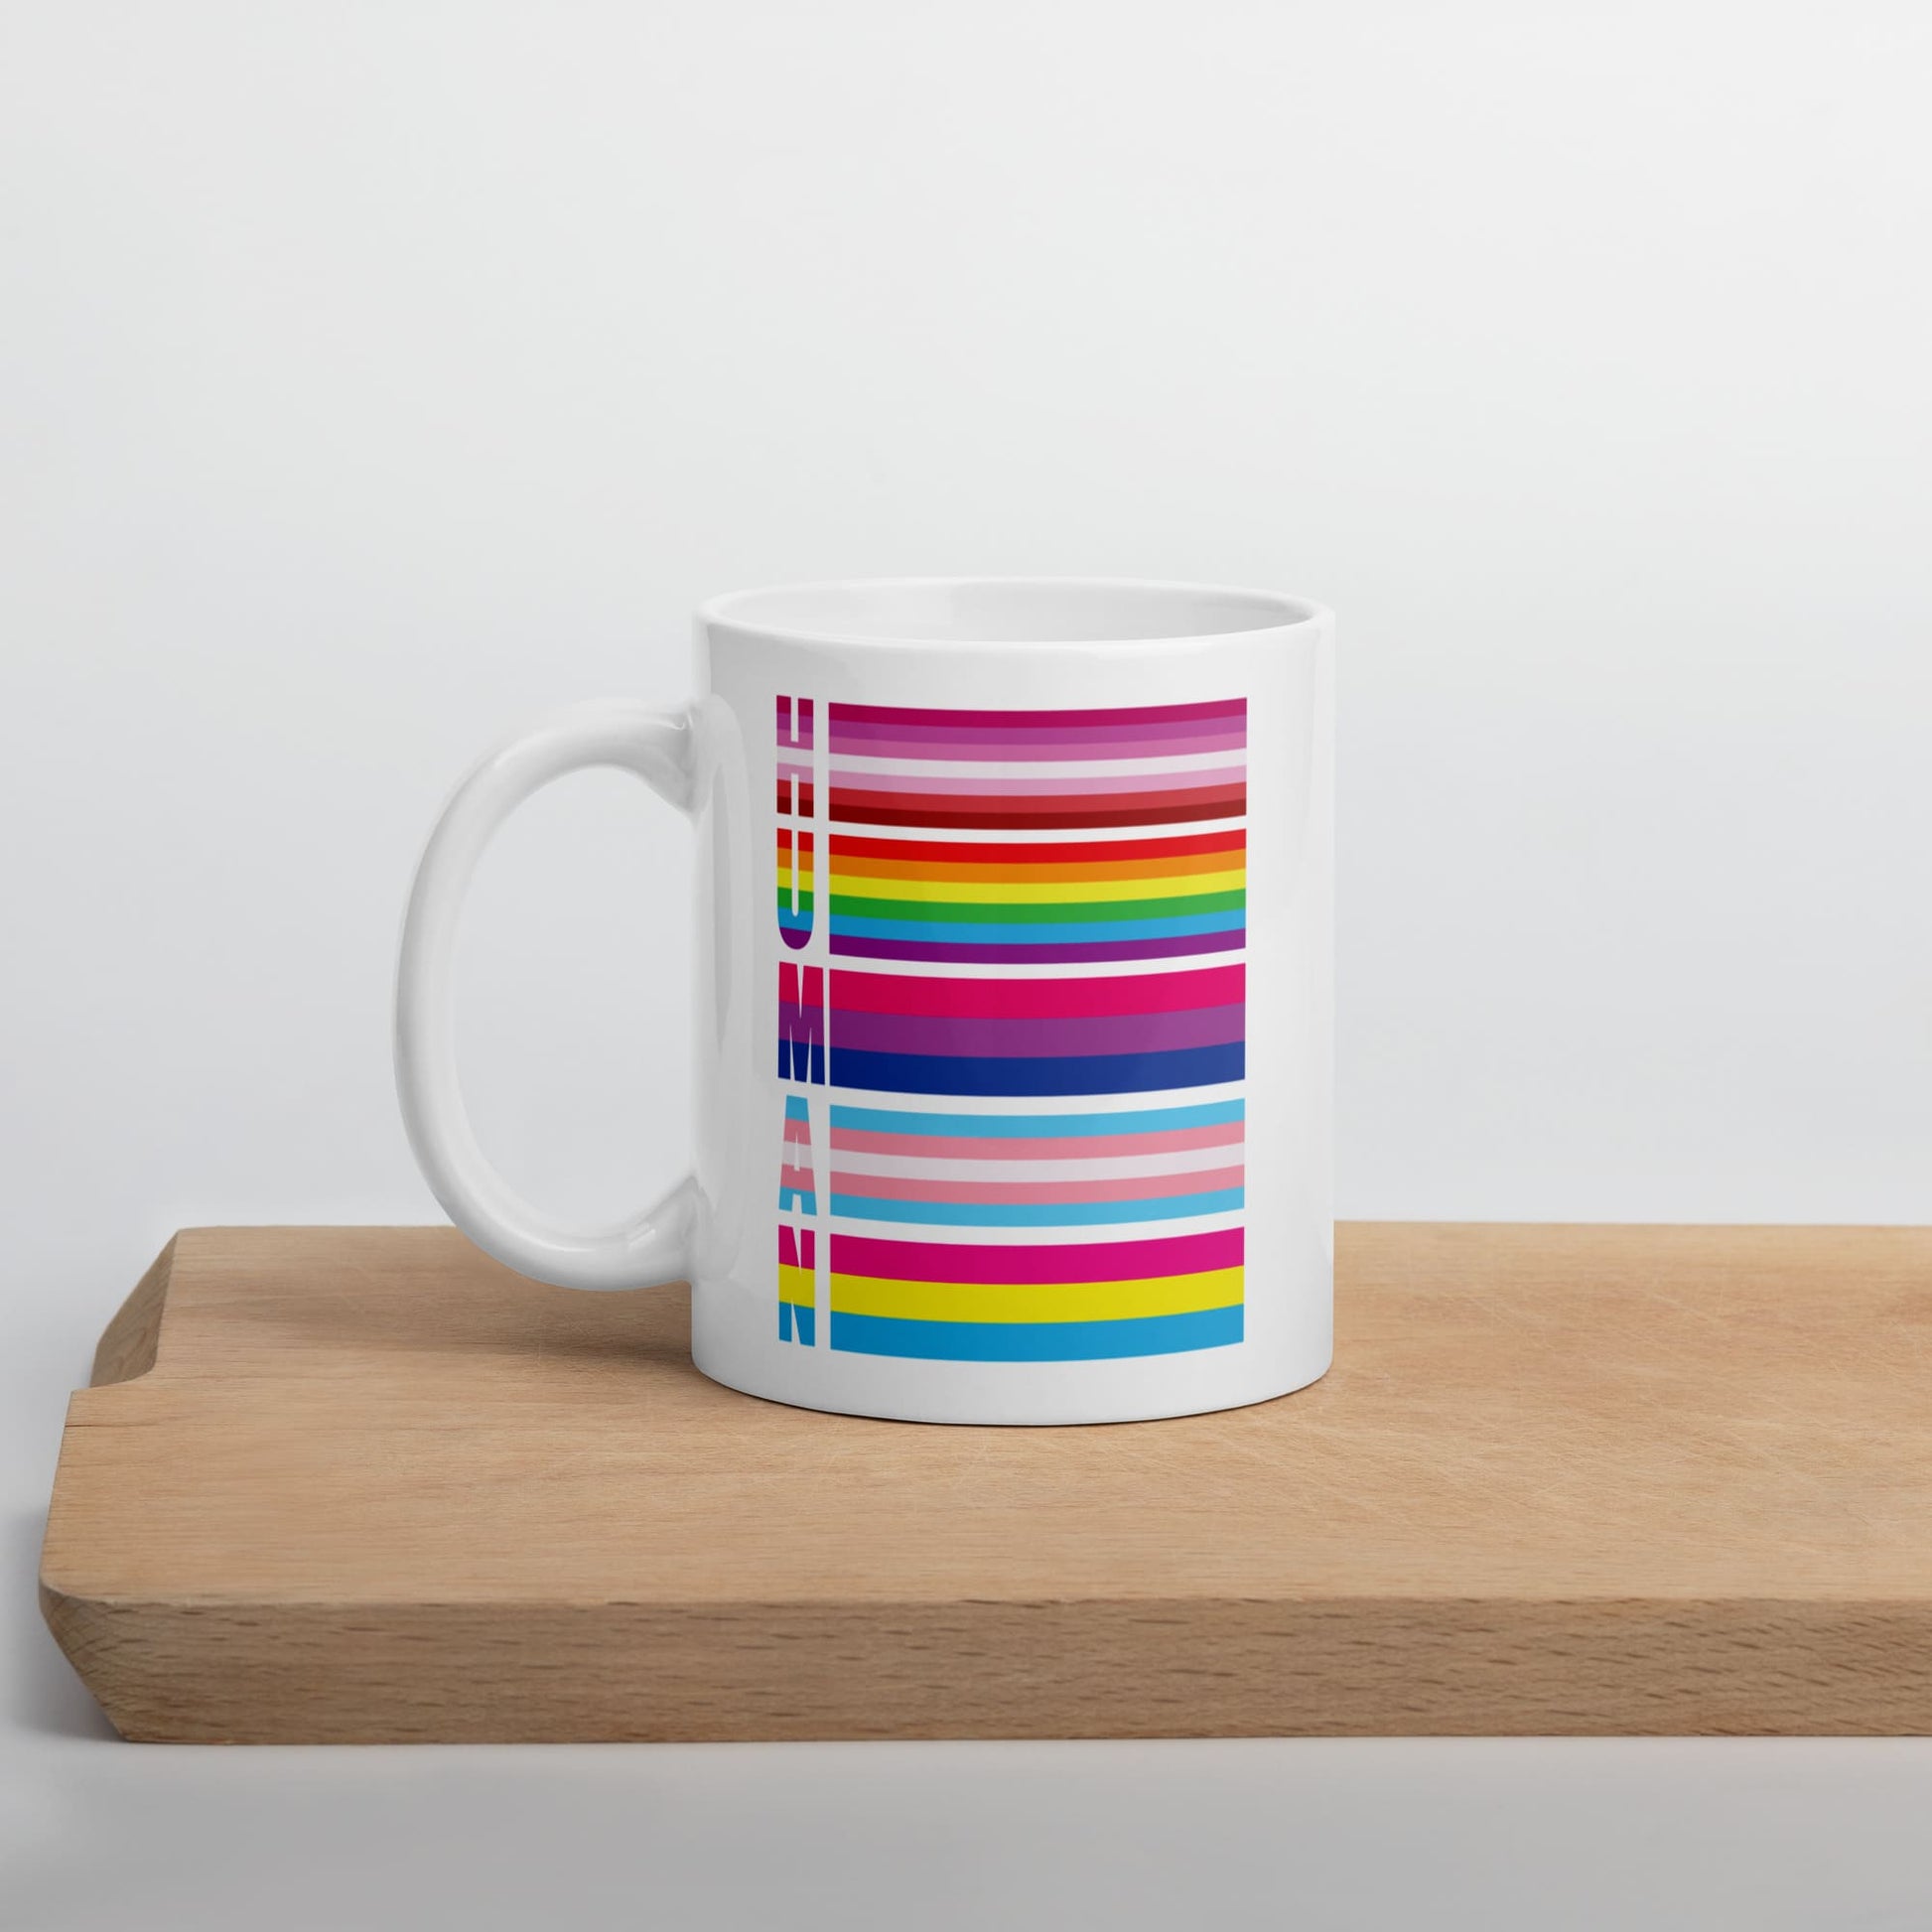 lesbian bisexual transgender pansexual mug, human LGBT pride coffee or tea cup on table